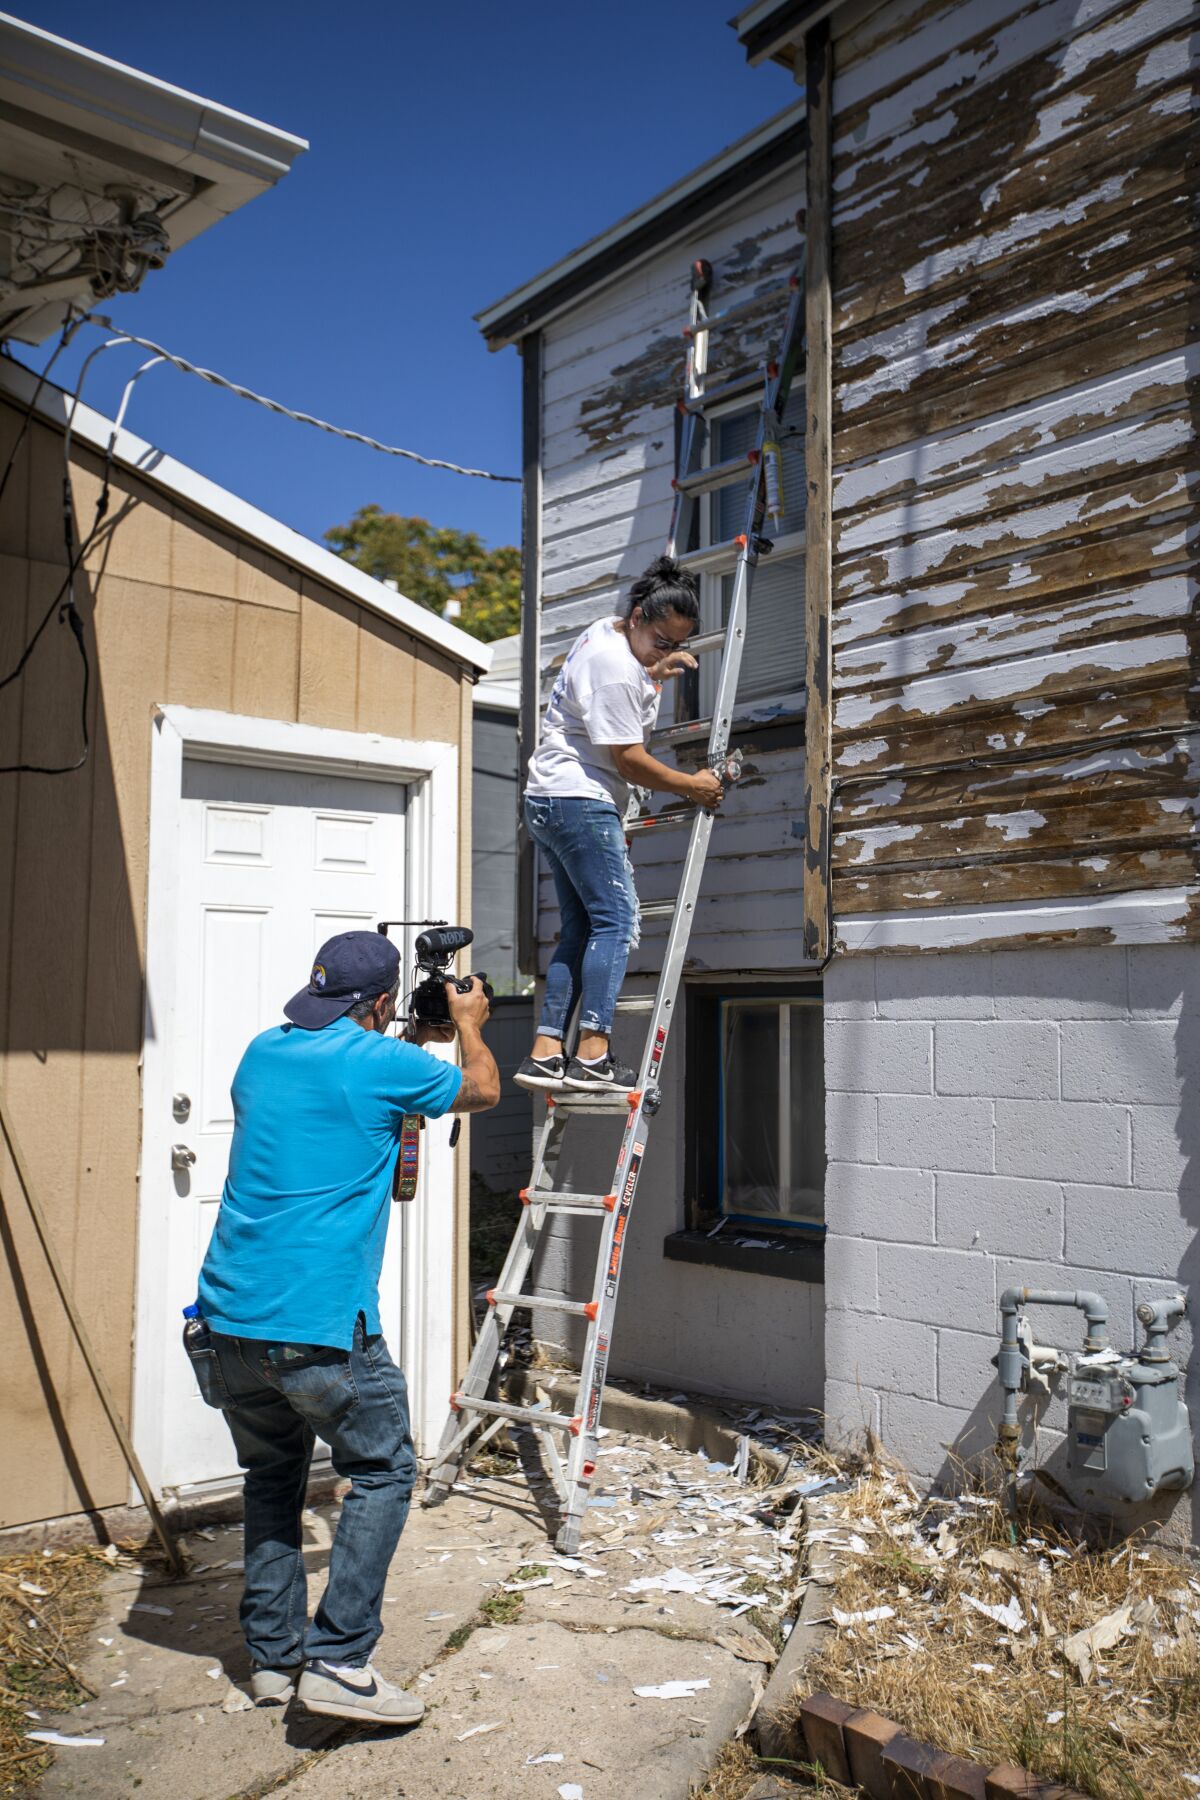 A man in a blue shirt talks to a woman on a ladder.